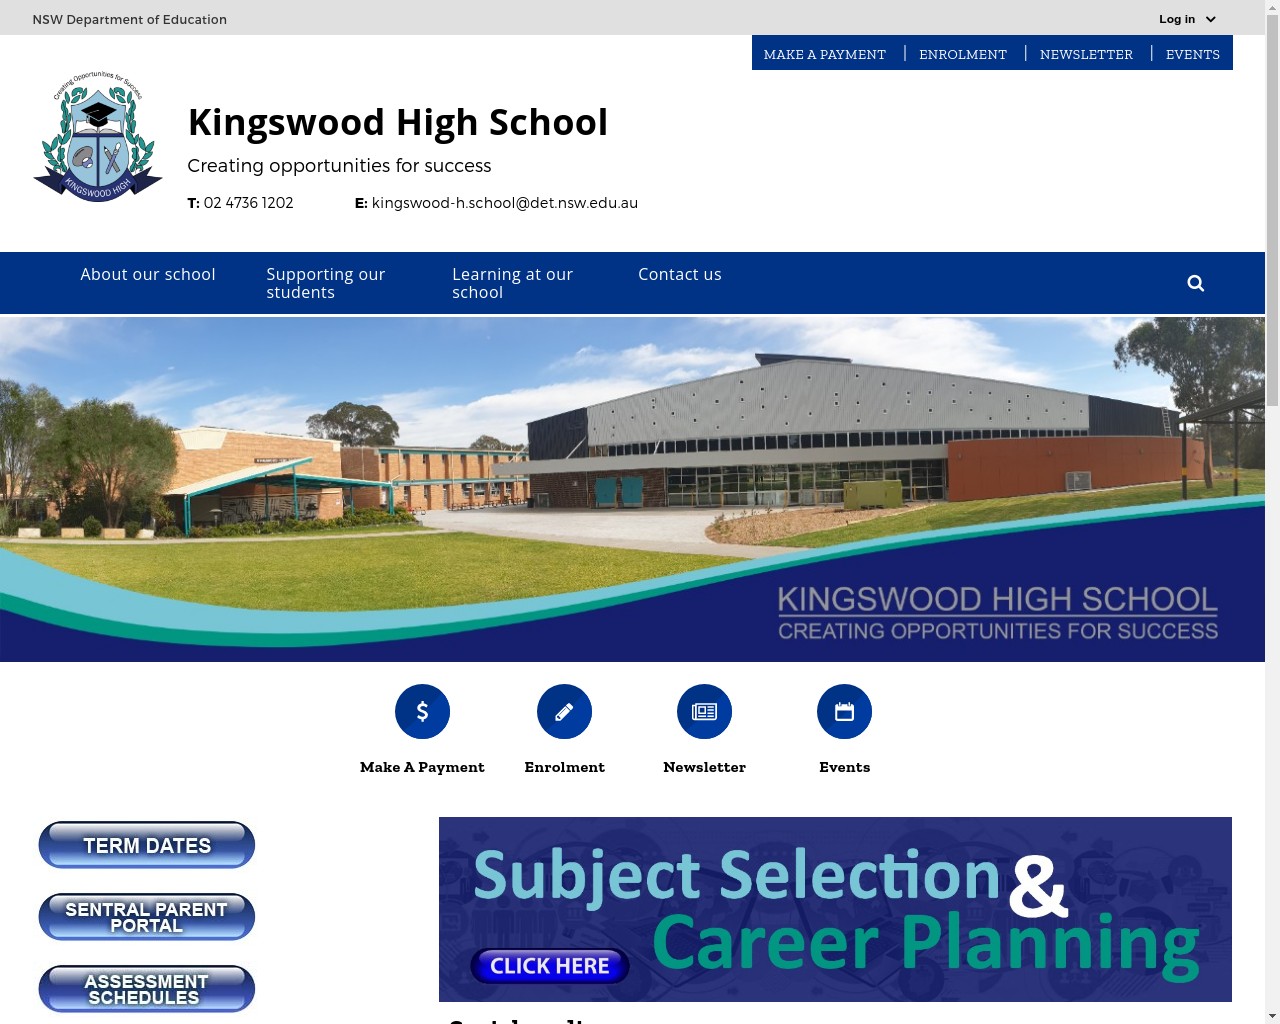 Kingswood High School